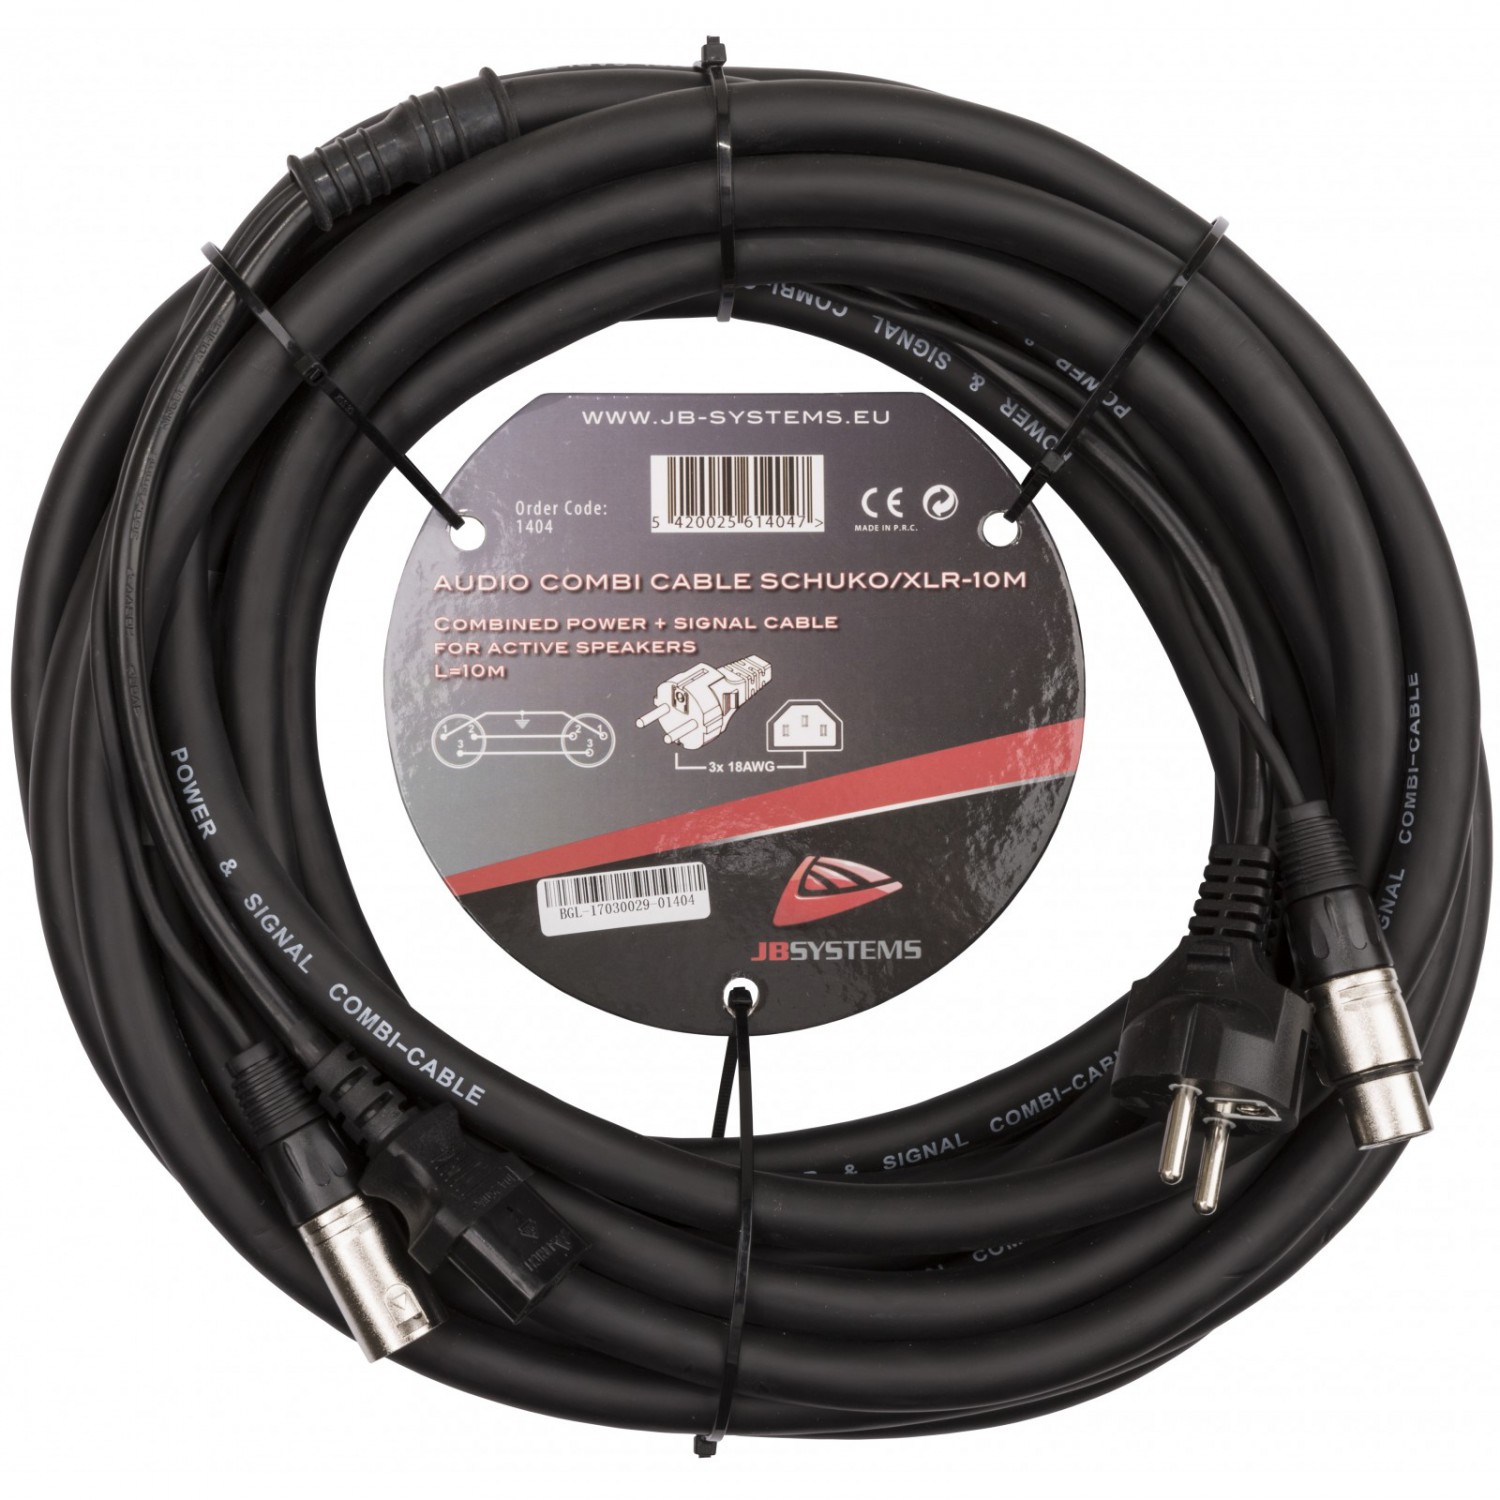 JB SYSTEMS AUDIO COMBI CABLE SCHUKO/XLR-10M - kabel IEC - XLR